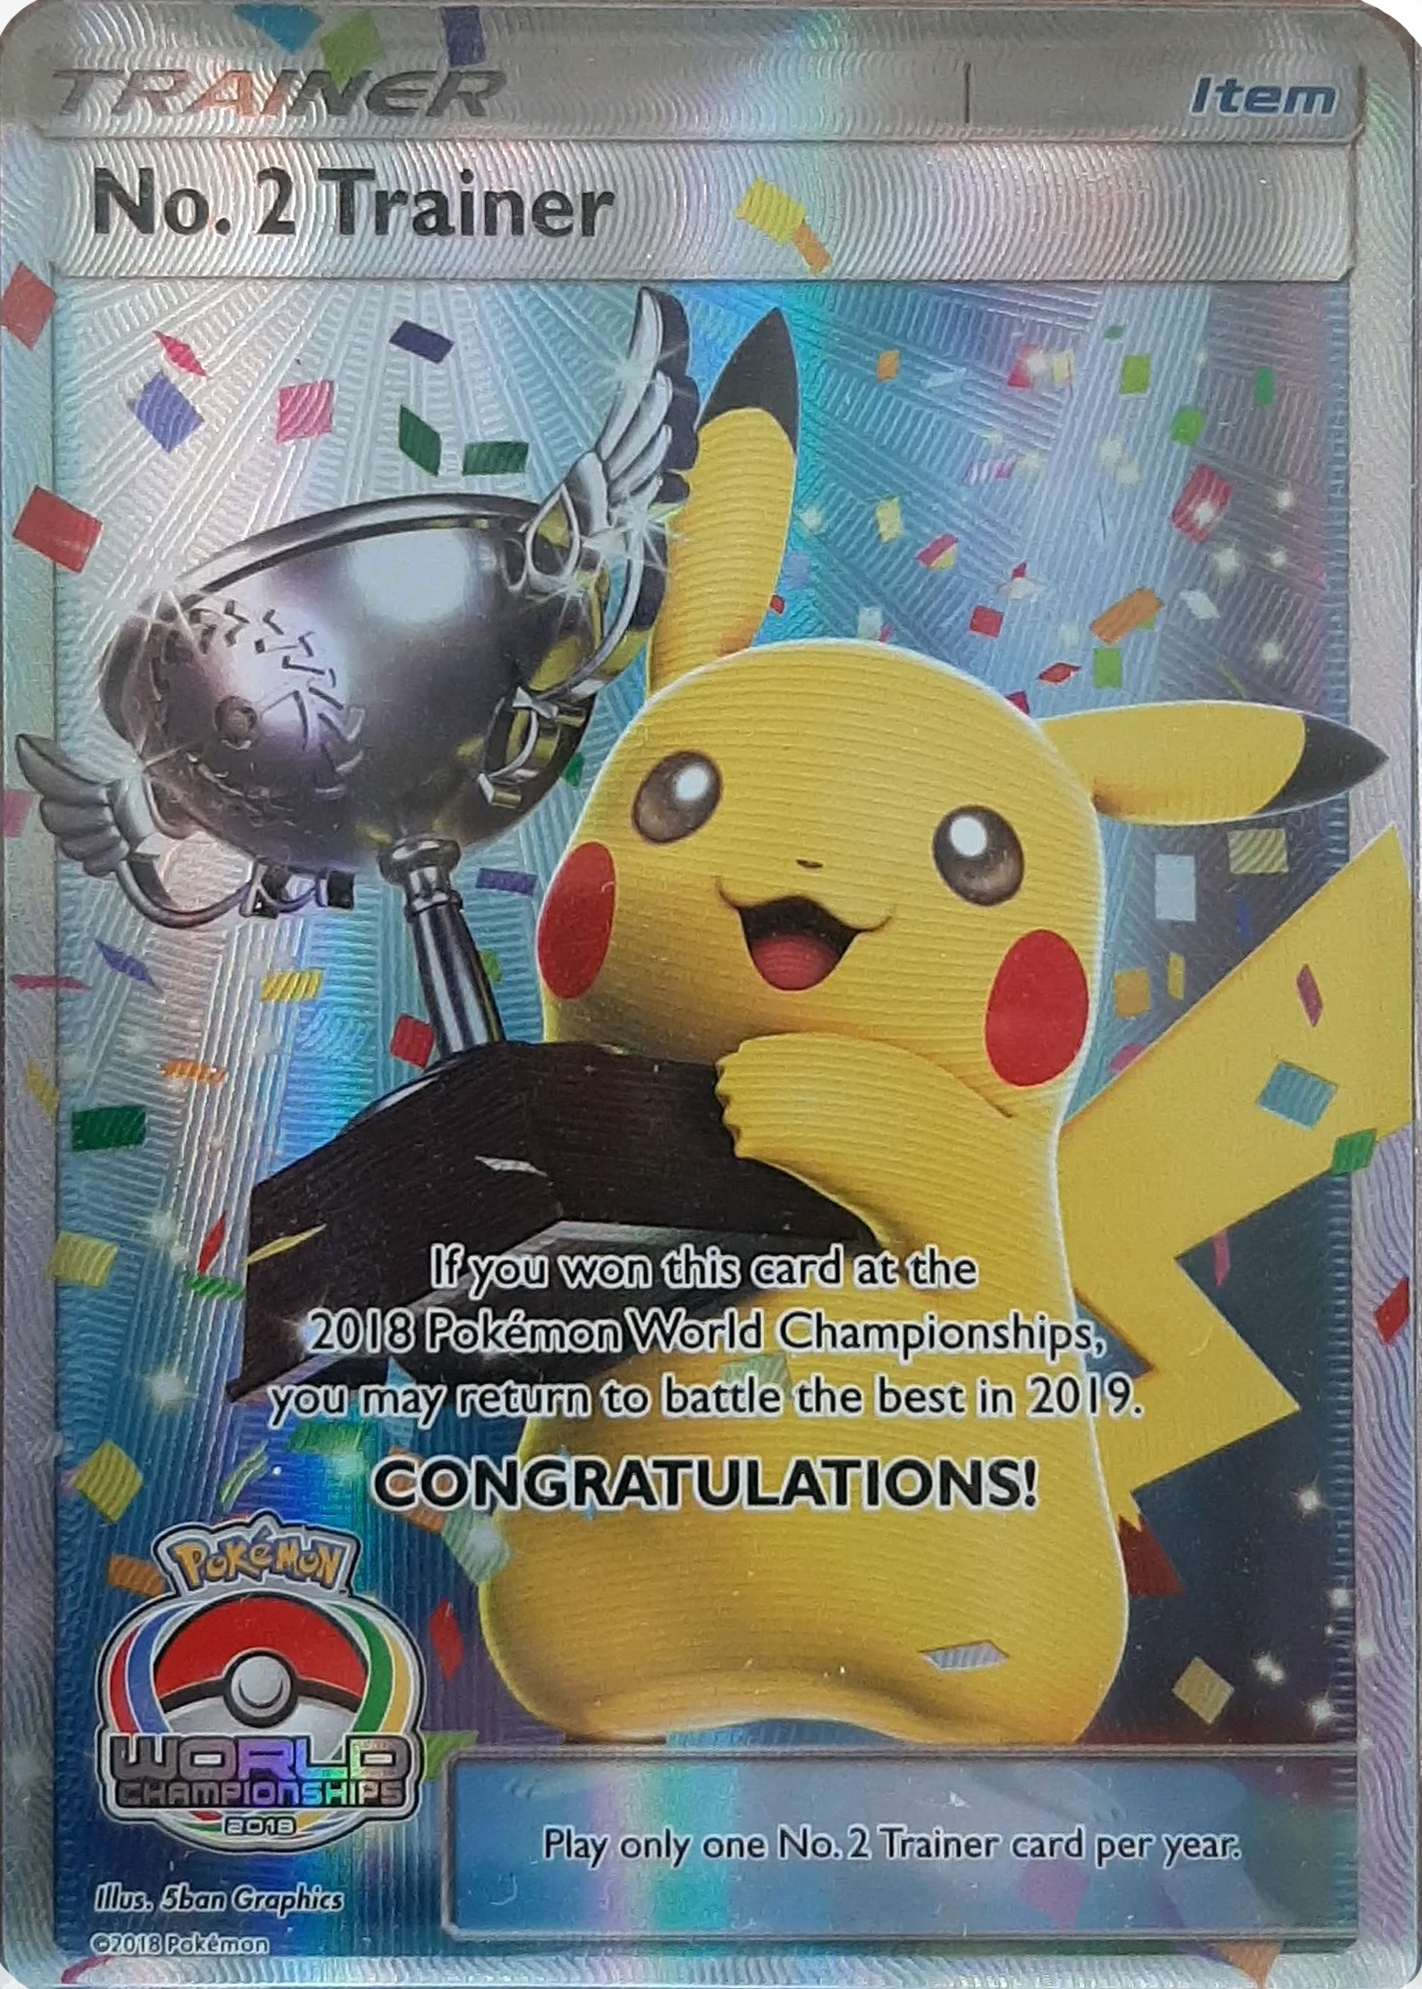 Certified Pokemon Master, Shiny Pikachu Illus. Masakazu Fukuda